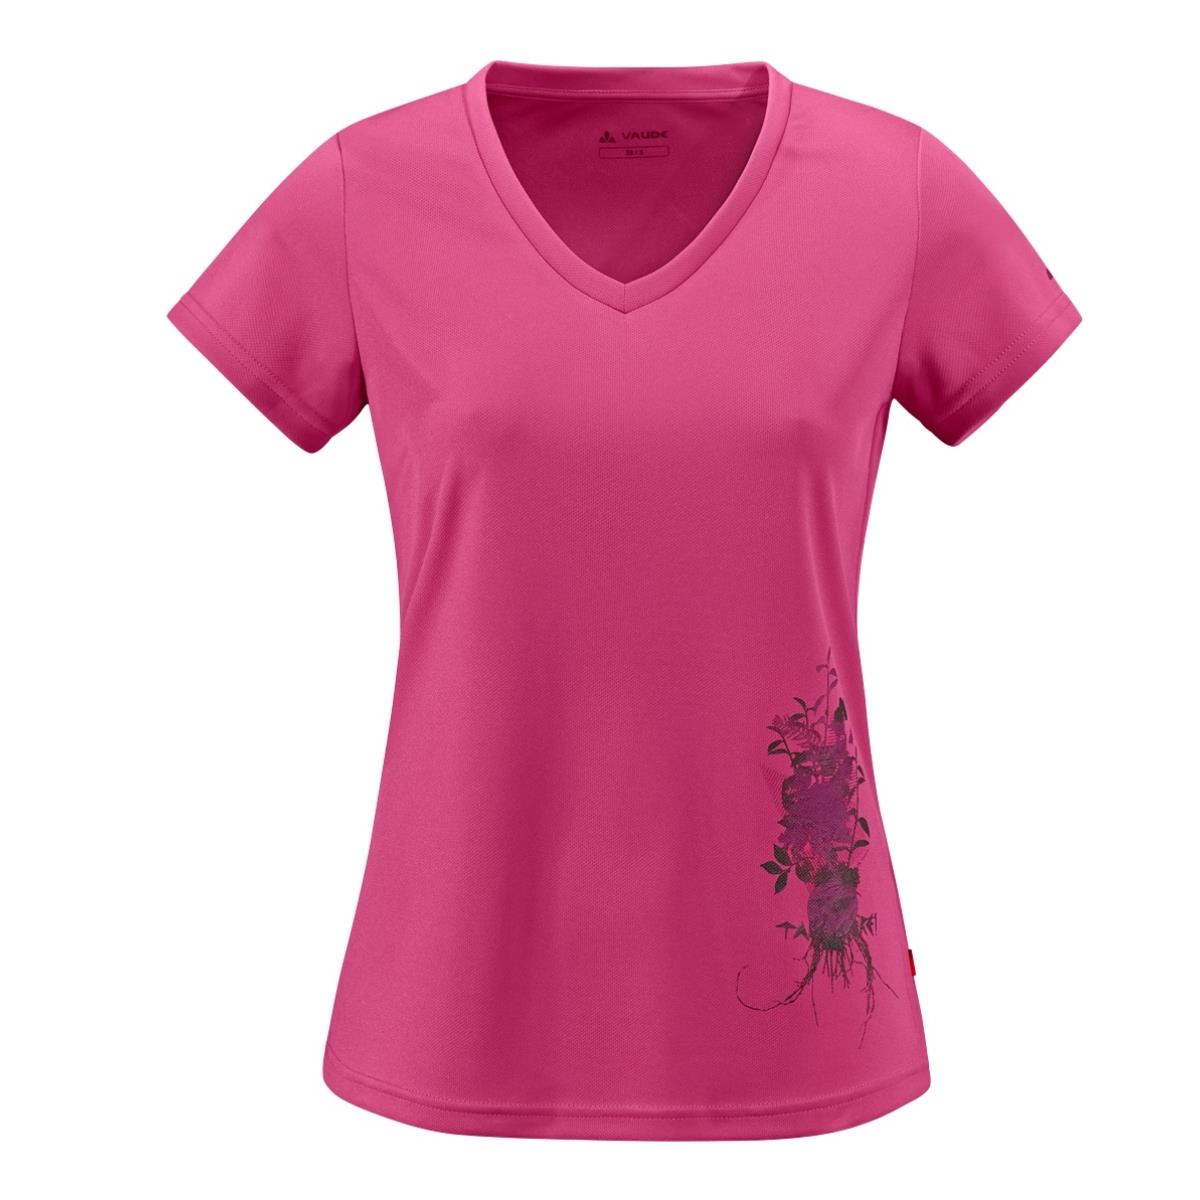 Футболка Wo Mayas VI Shirt Vaude жен футболка арт 19 0600 вишневый р 44